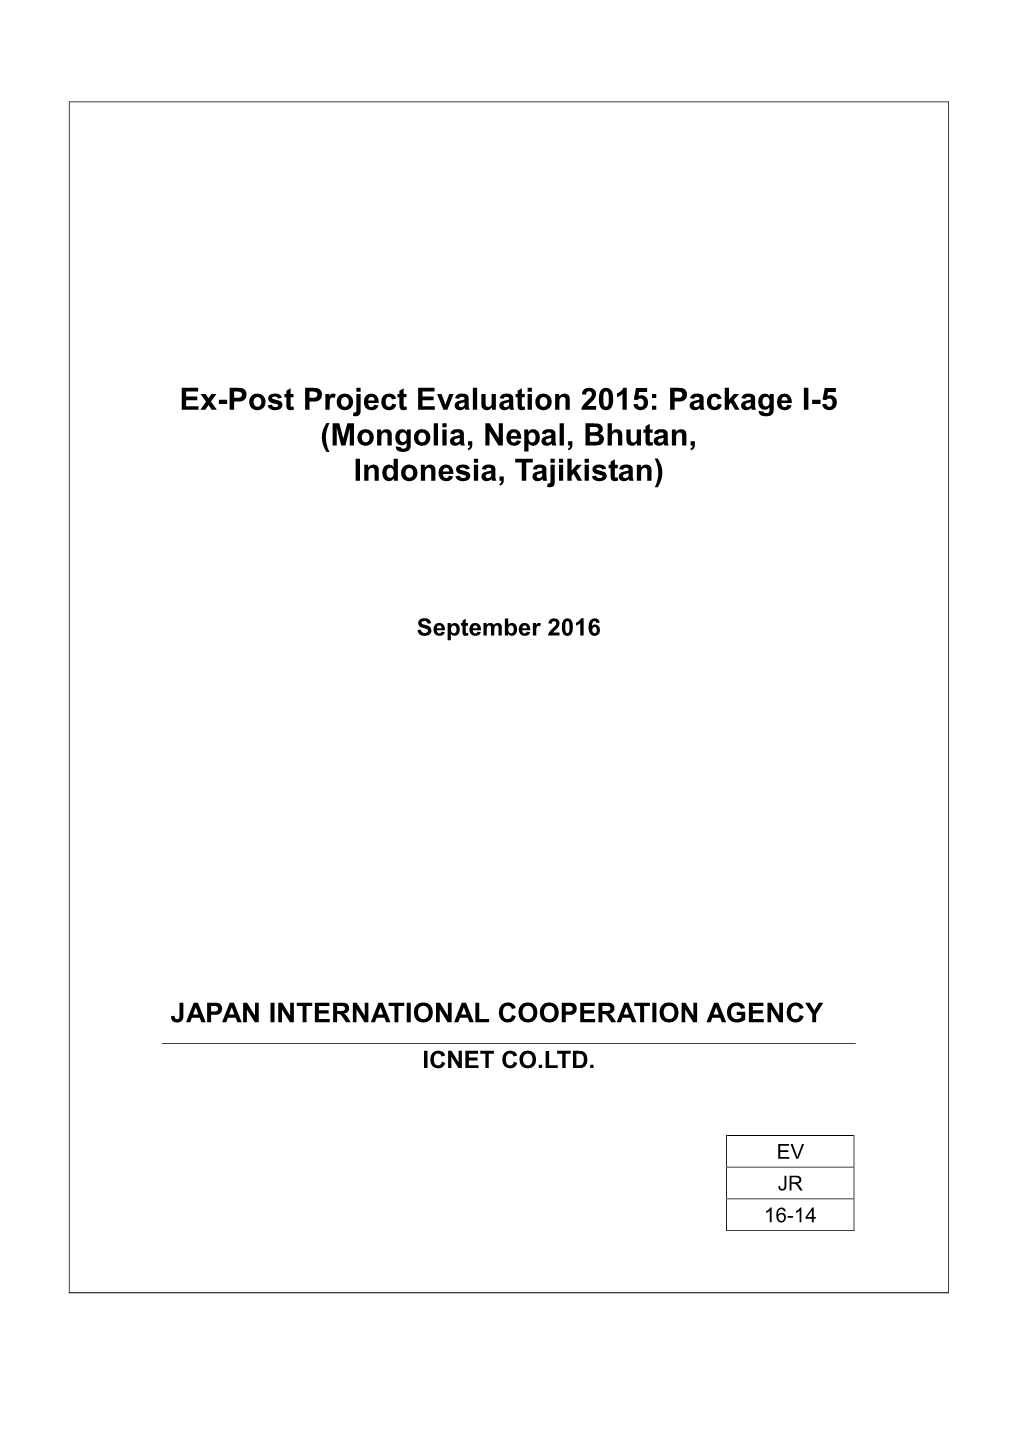 Ex-Post Project Evaluation 2015: Package I-5 (Mongolia, Nepal, Bhutan, Indonesia, Tajikistan)